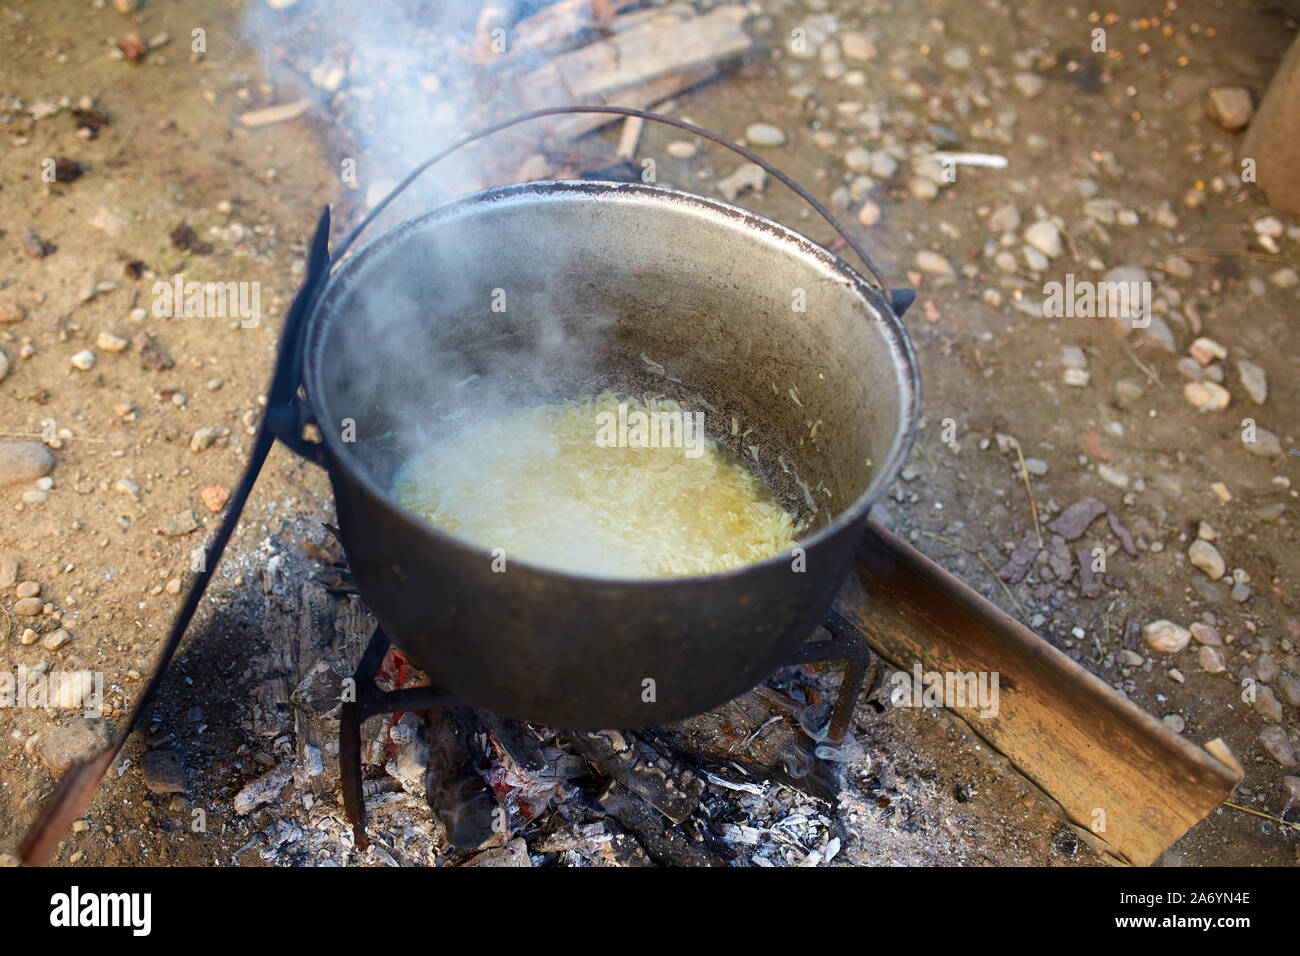 https://c8.alamy.com/comp/2A6YN4E/big-cast-iron-pot-boiling-water-outdoor-in-the-countryside-2A6YN4E.jpg